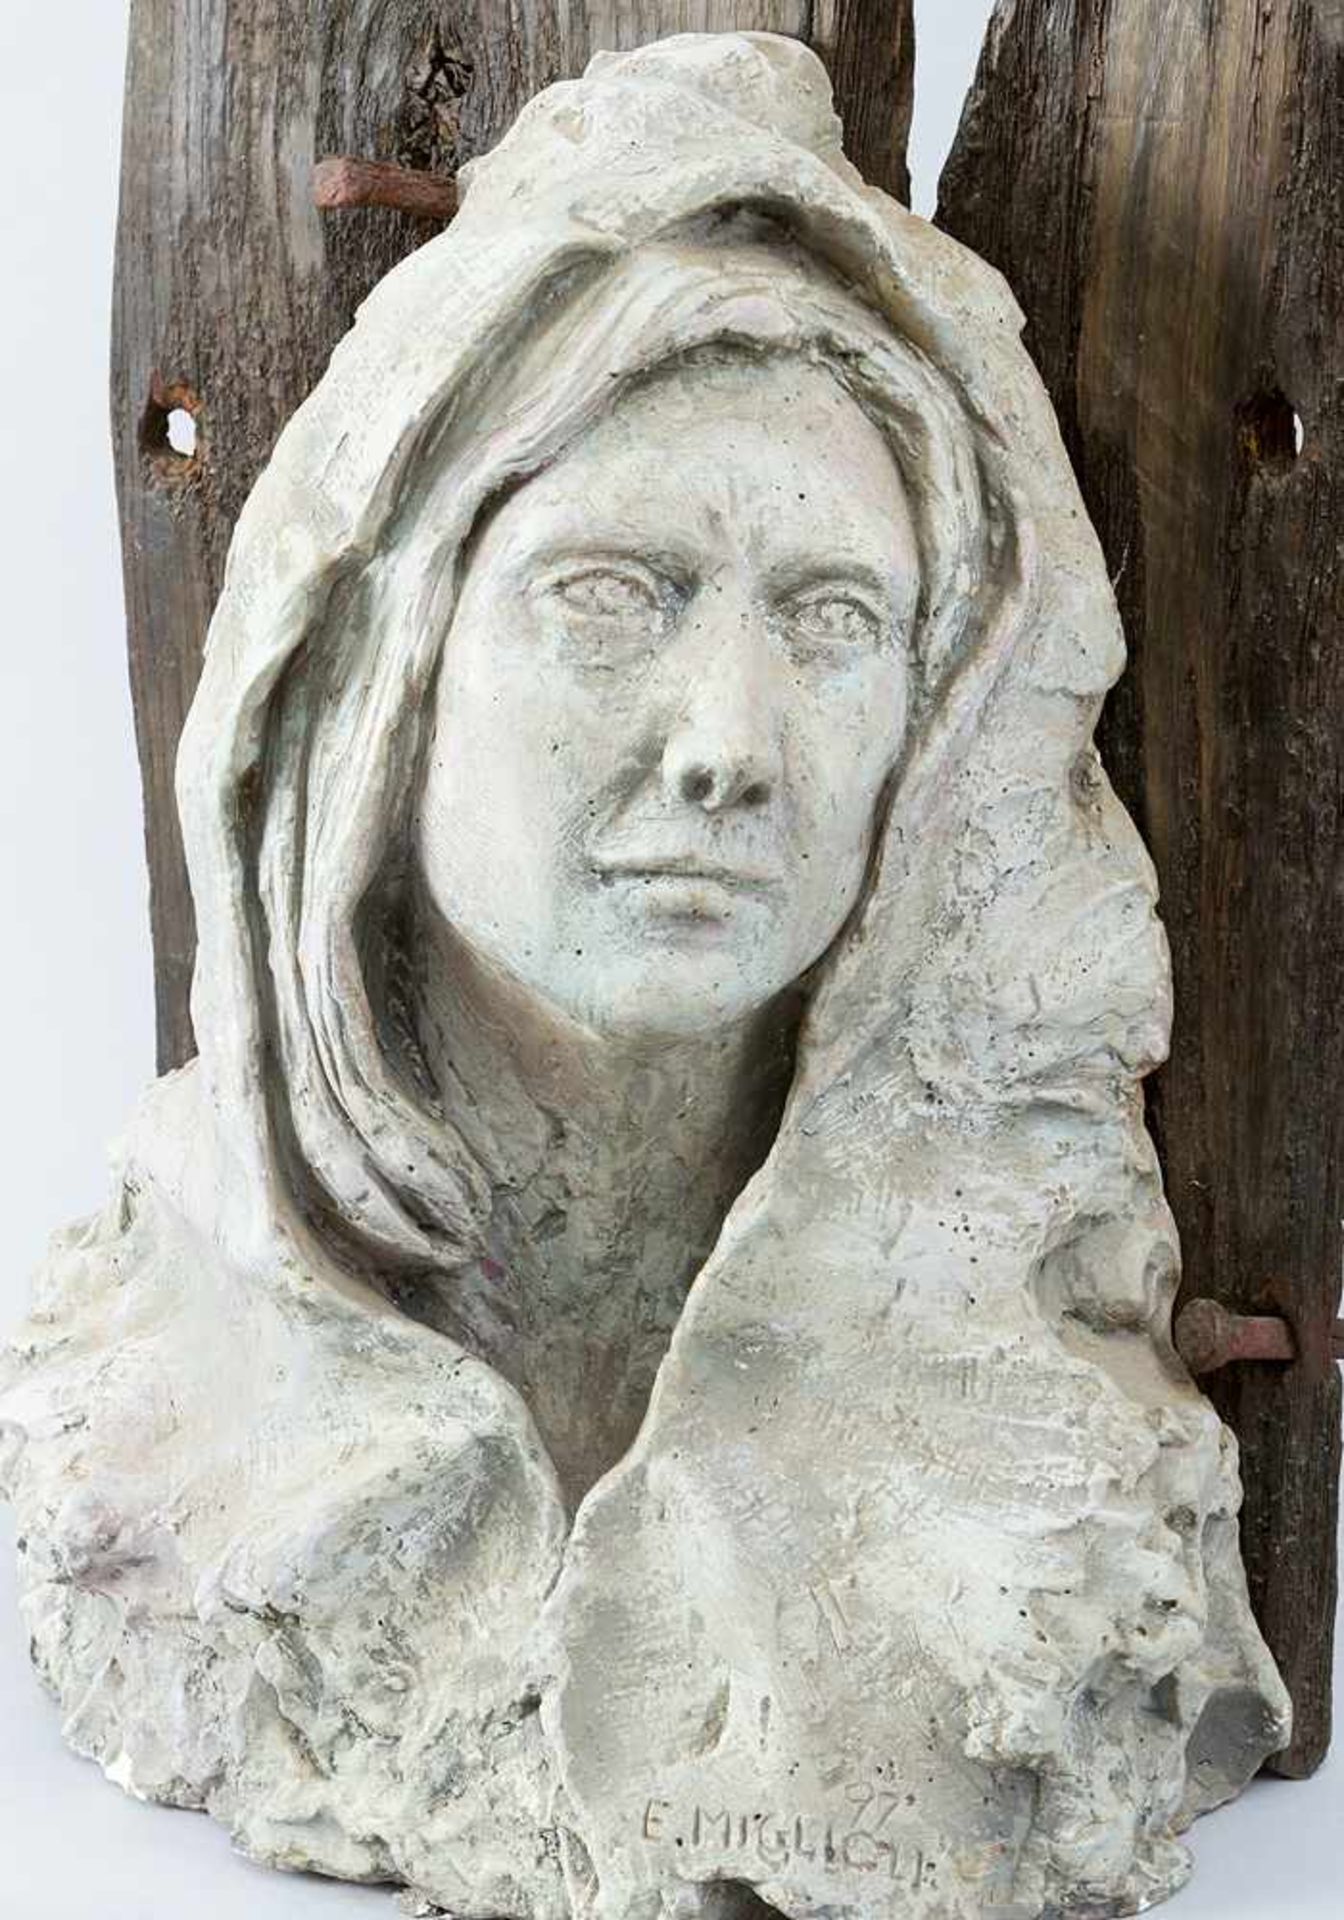 E.Nigliori, sculptor - Bild 2 aus 3